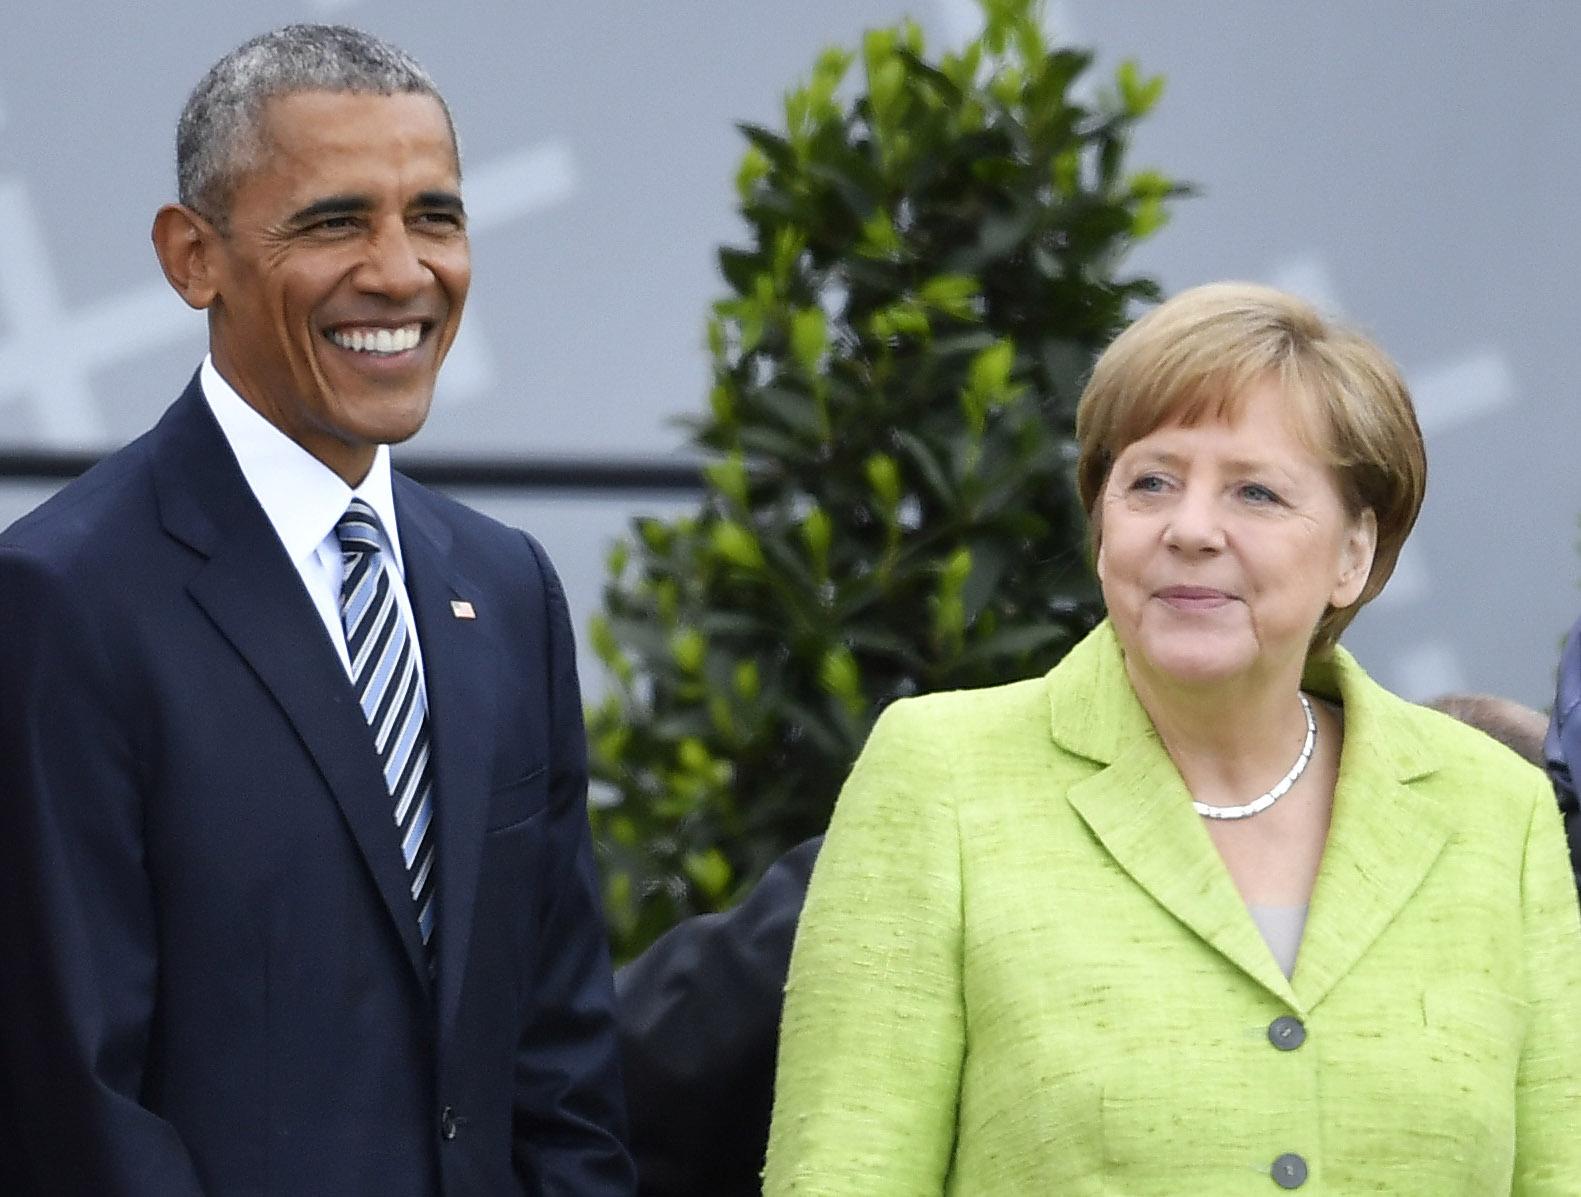 Barack Obama with Angela Merkel in Berlin